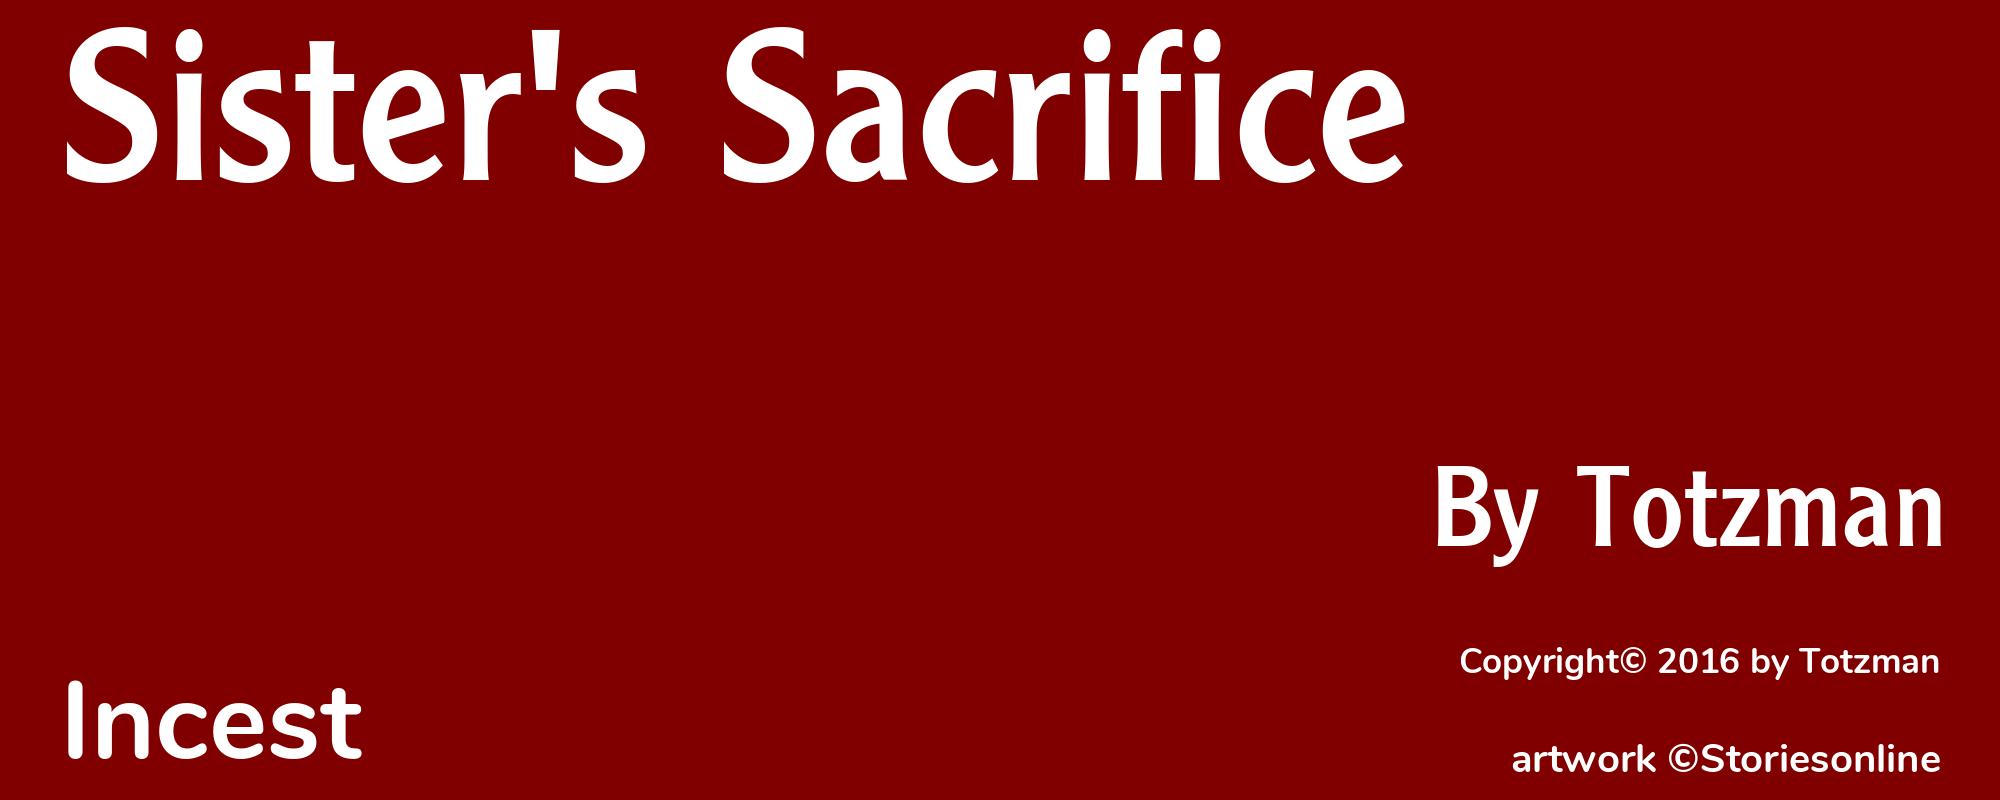 Sister's Sacrifice - Cover